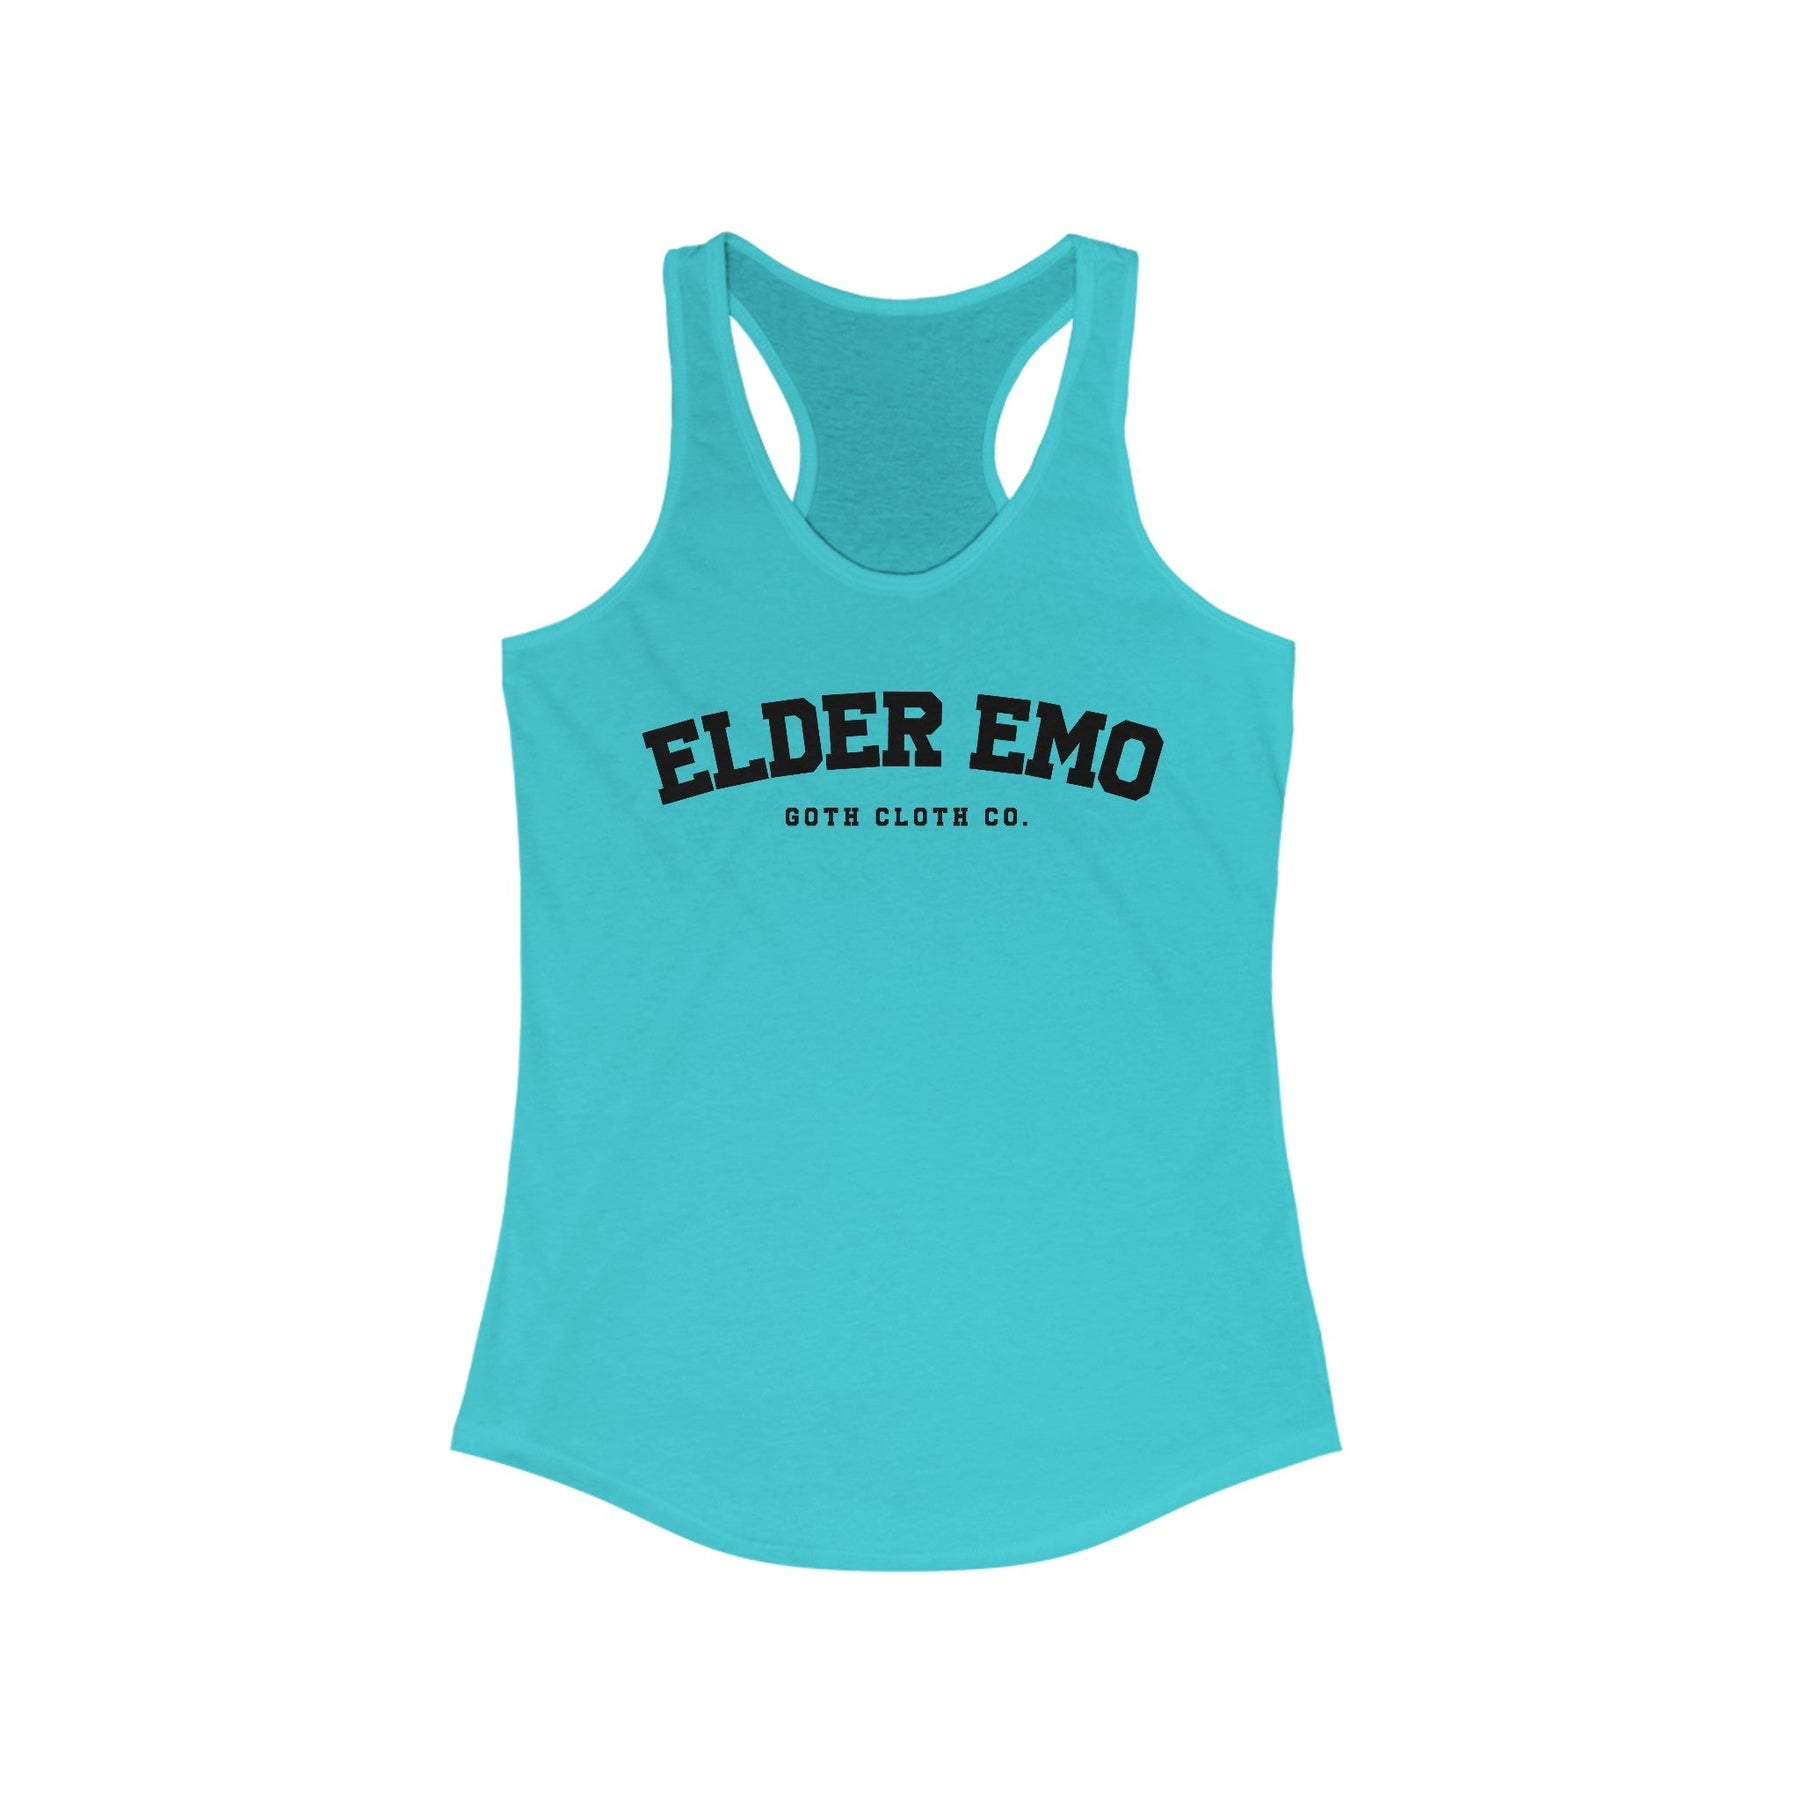 Elder Emo College Women's Racerback Tank - Goth Cloth Co.Tank Top17500919627007933986